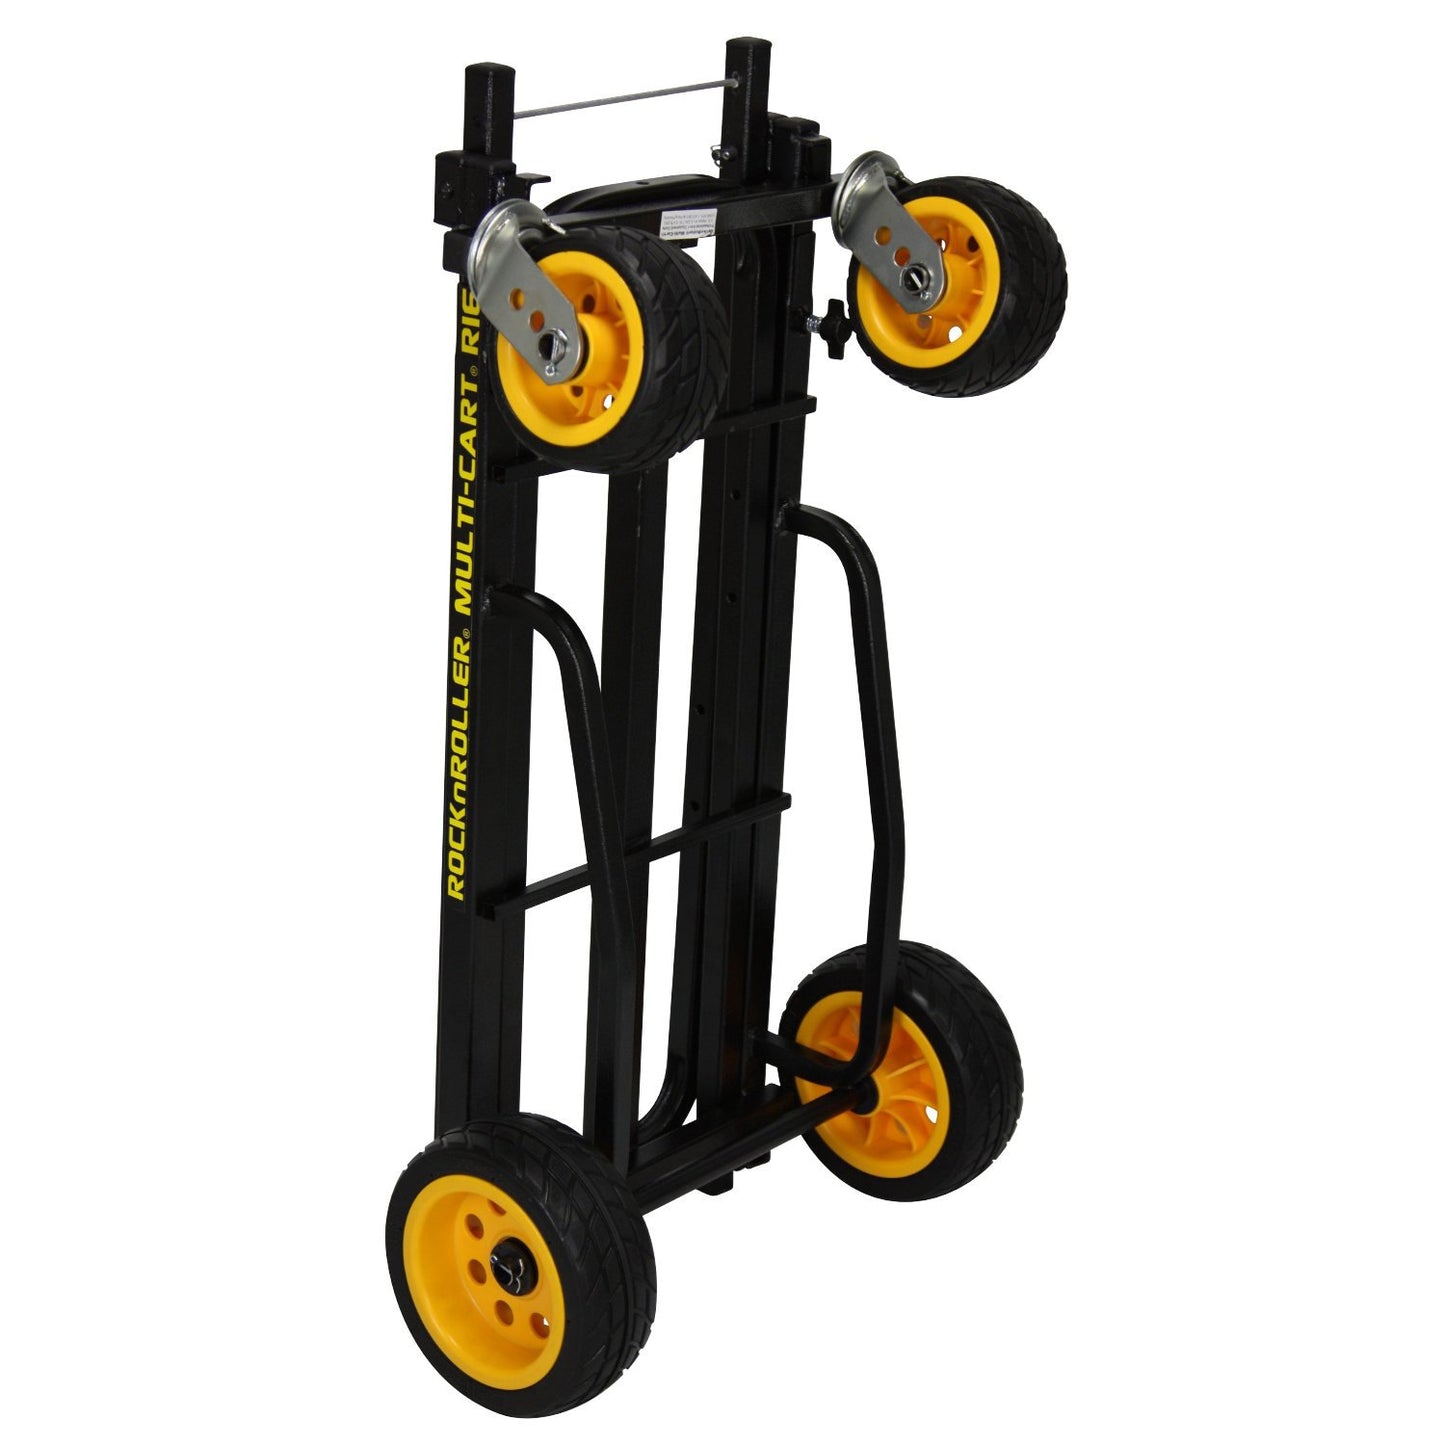 RocknRoller® Multi-Cart® R16RT "Max Wide"